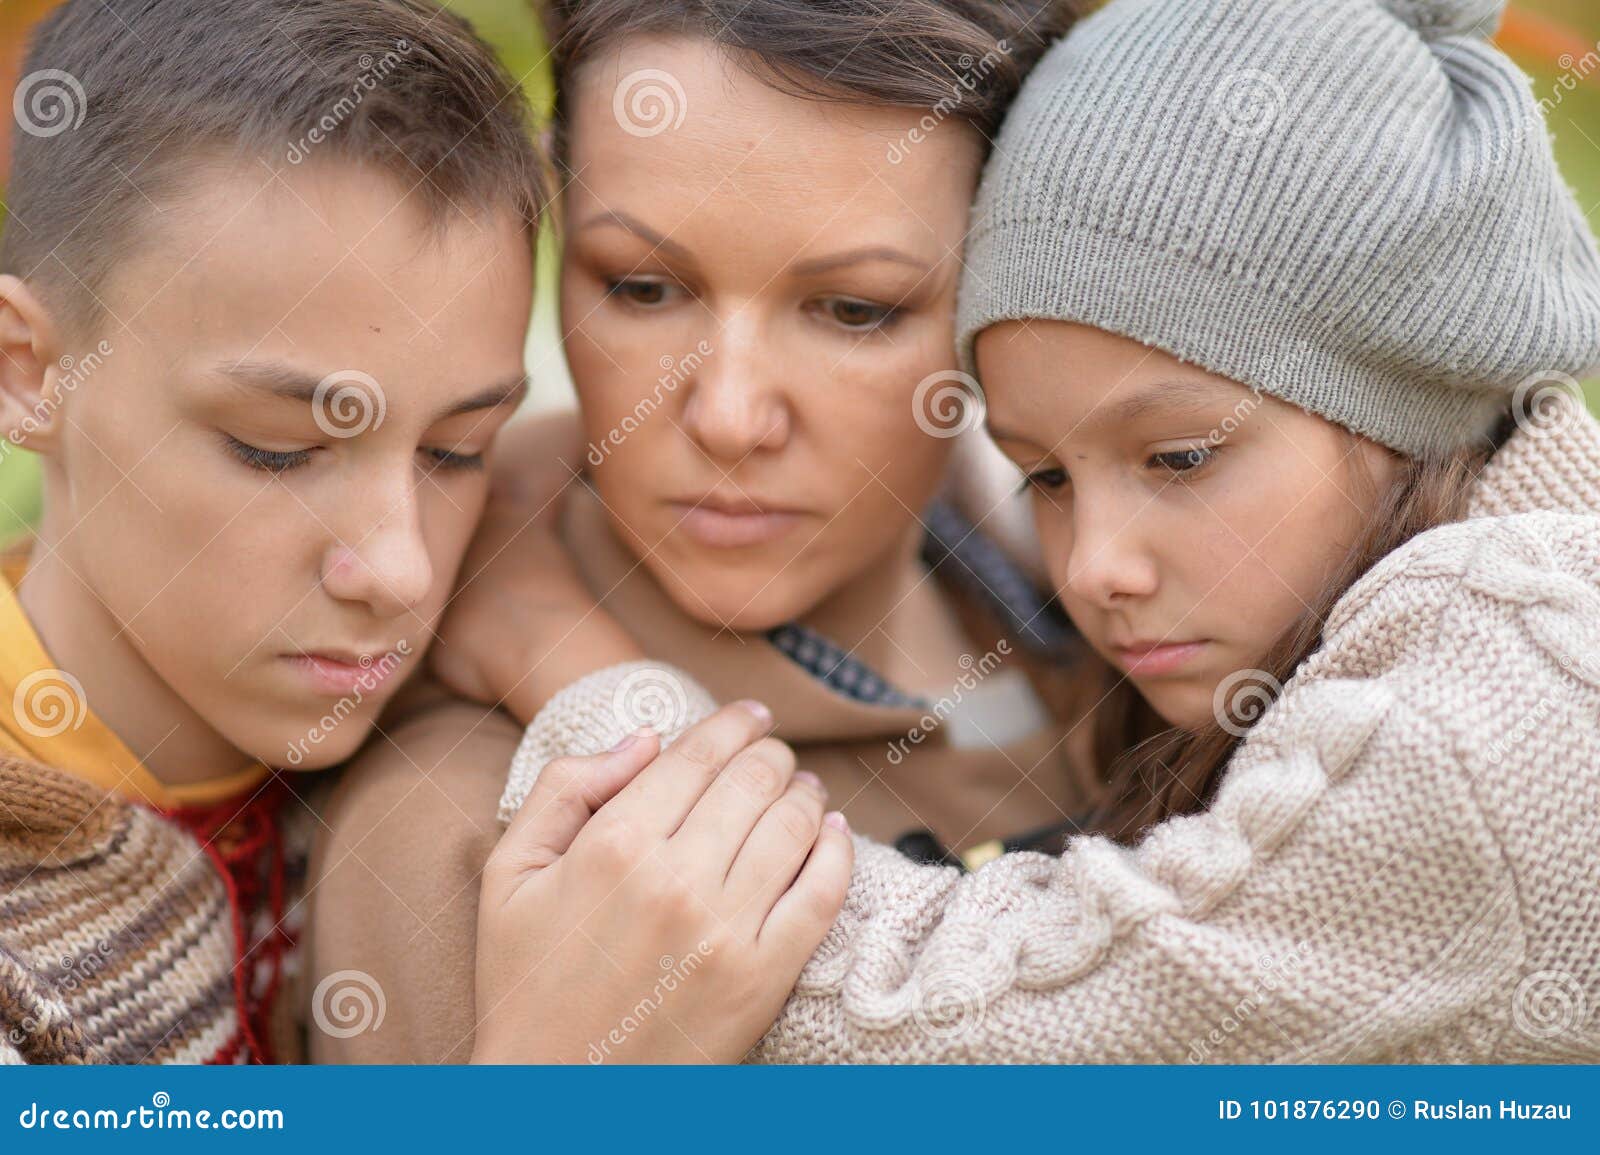 sad mother and children